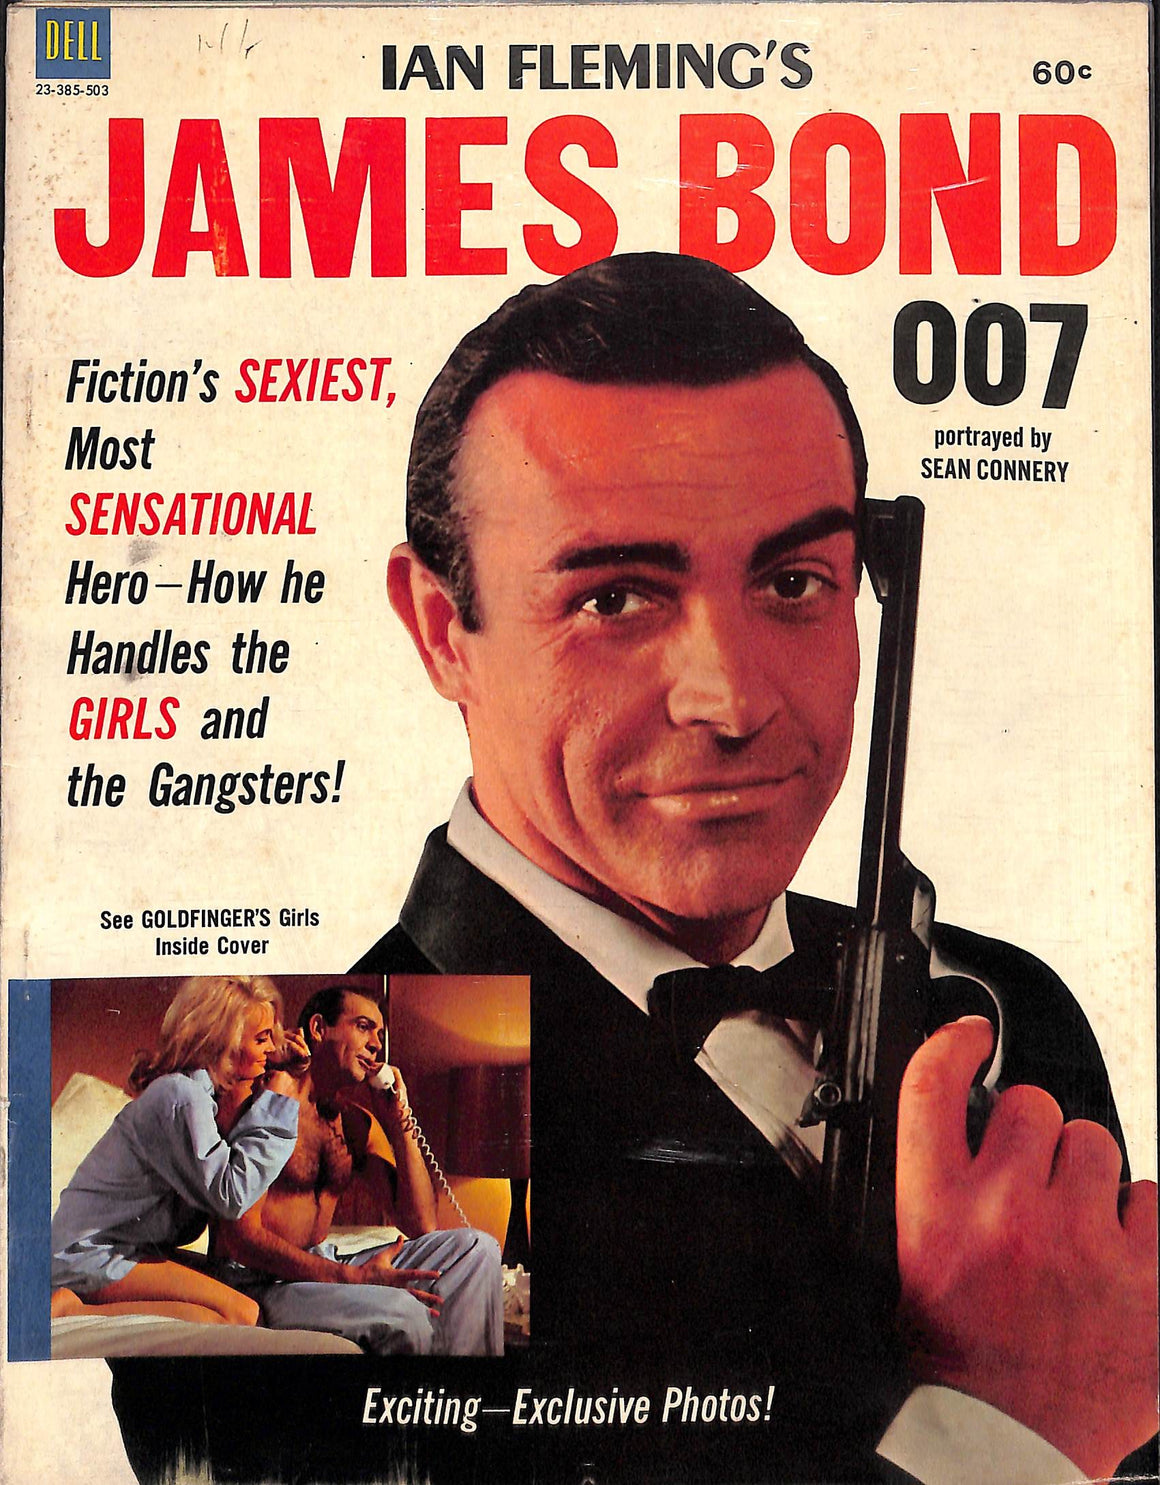 Ian Fleming's James Bond